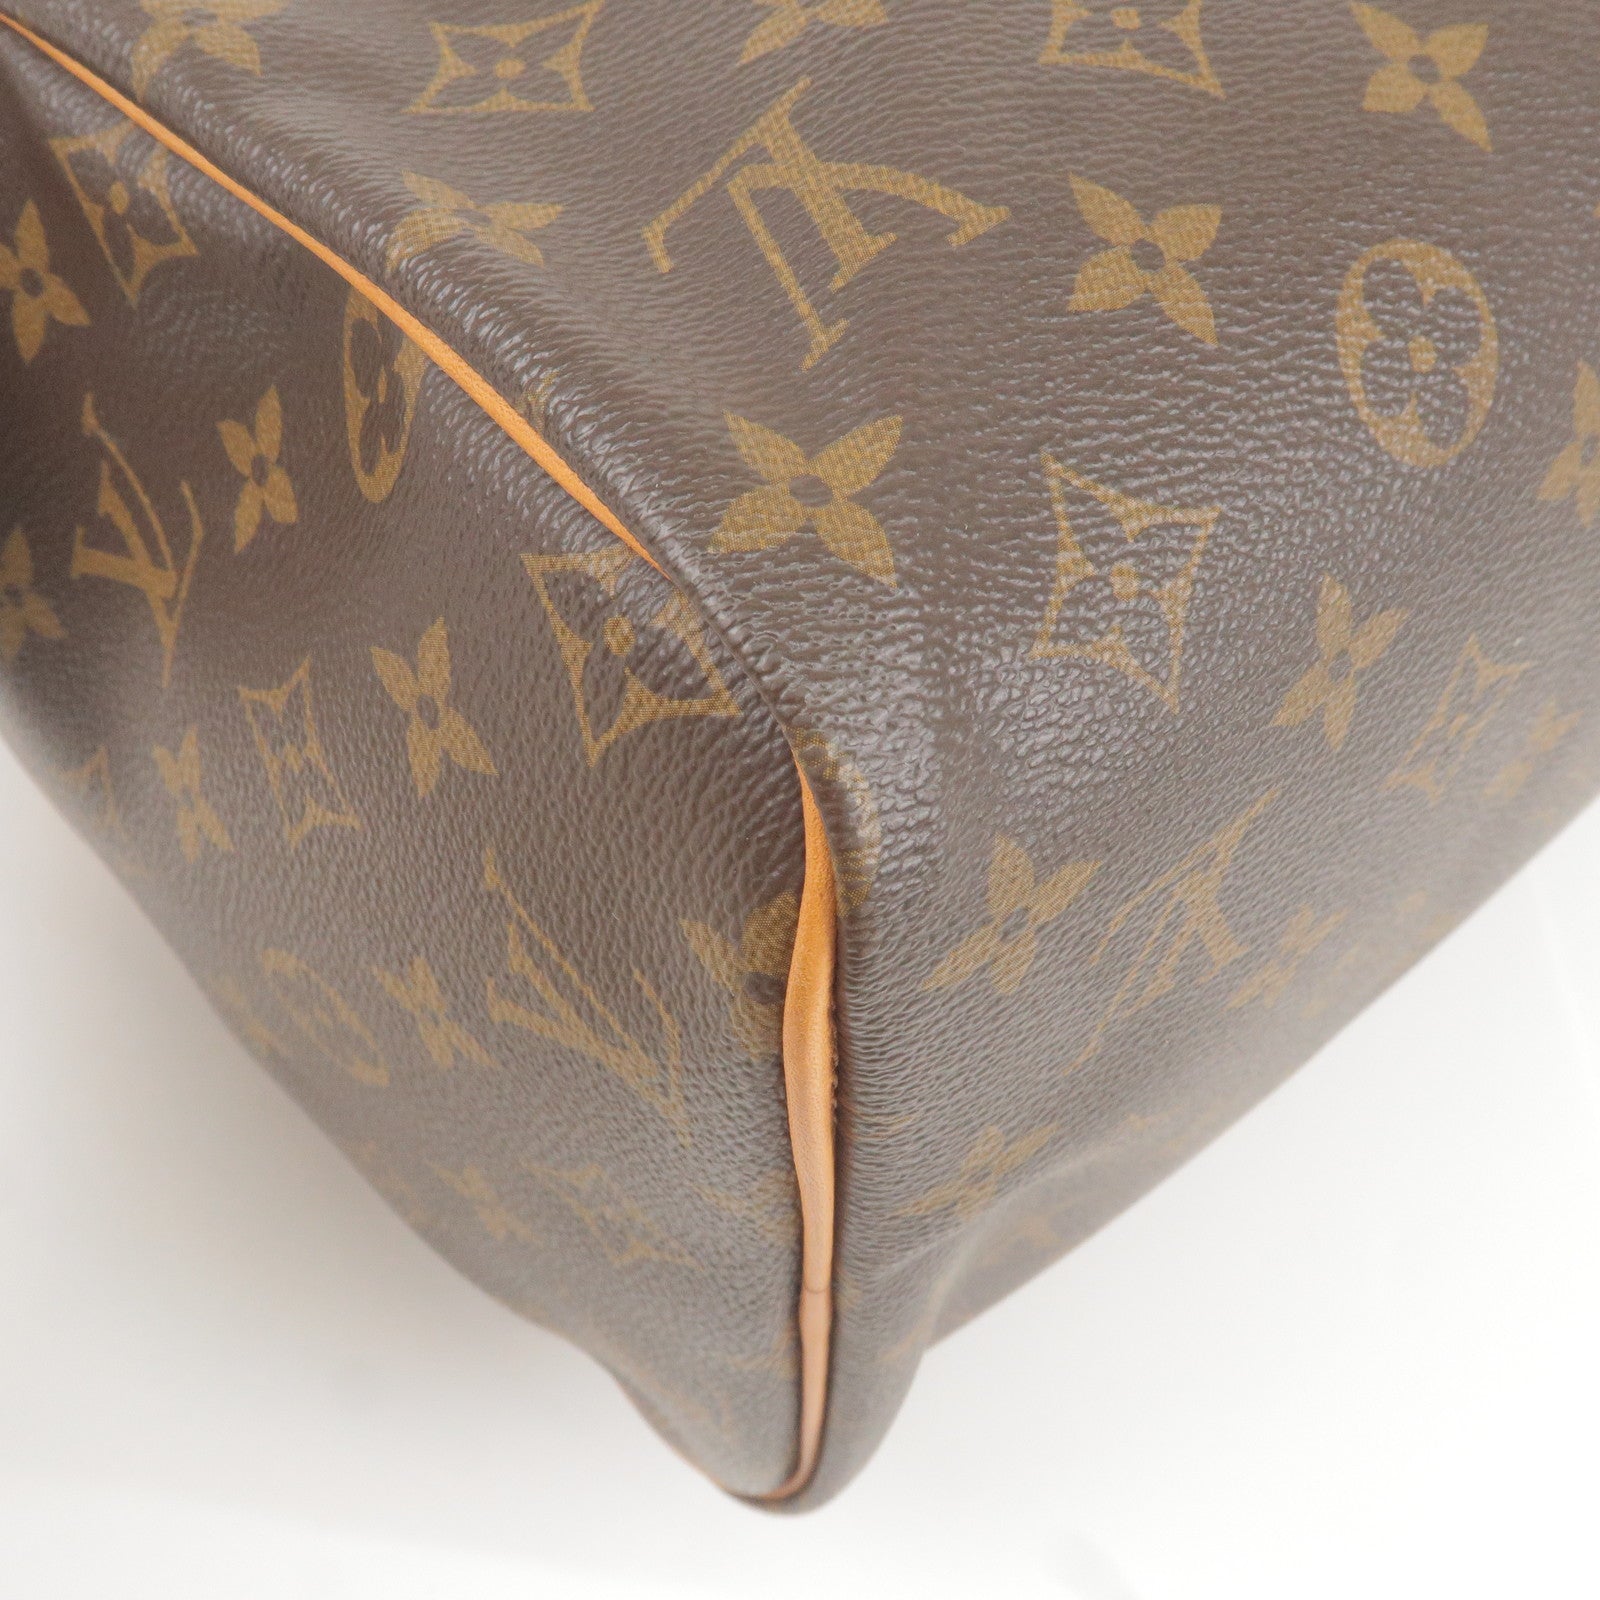 Louis Vuitton Speedy Bandouliere Bag For Men